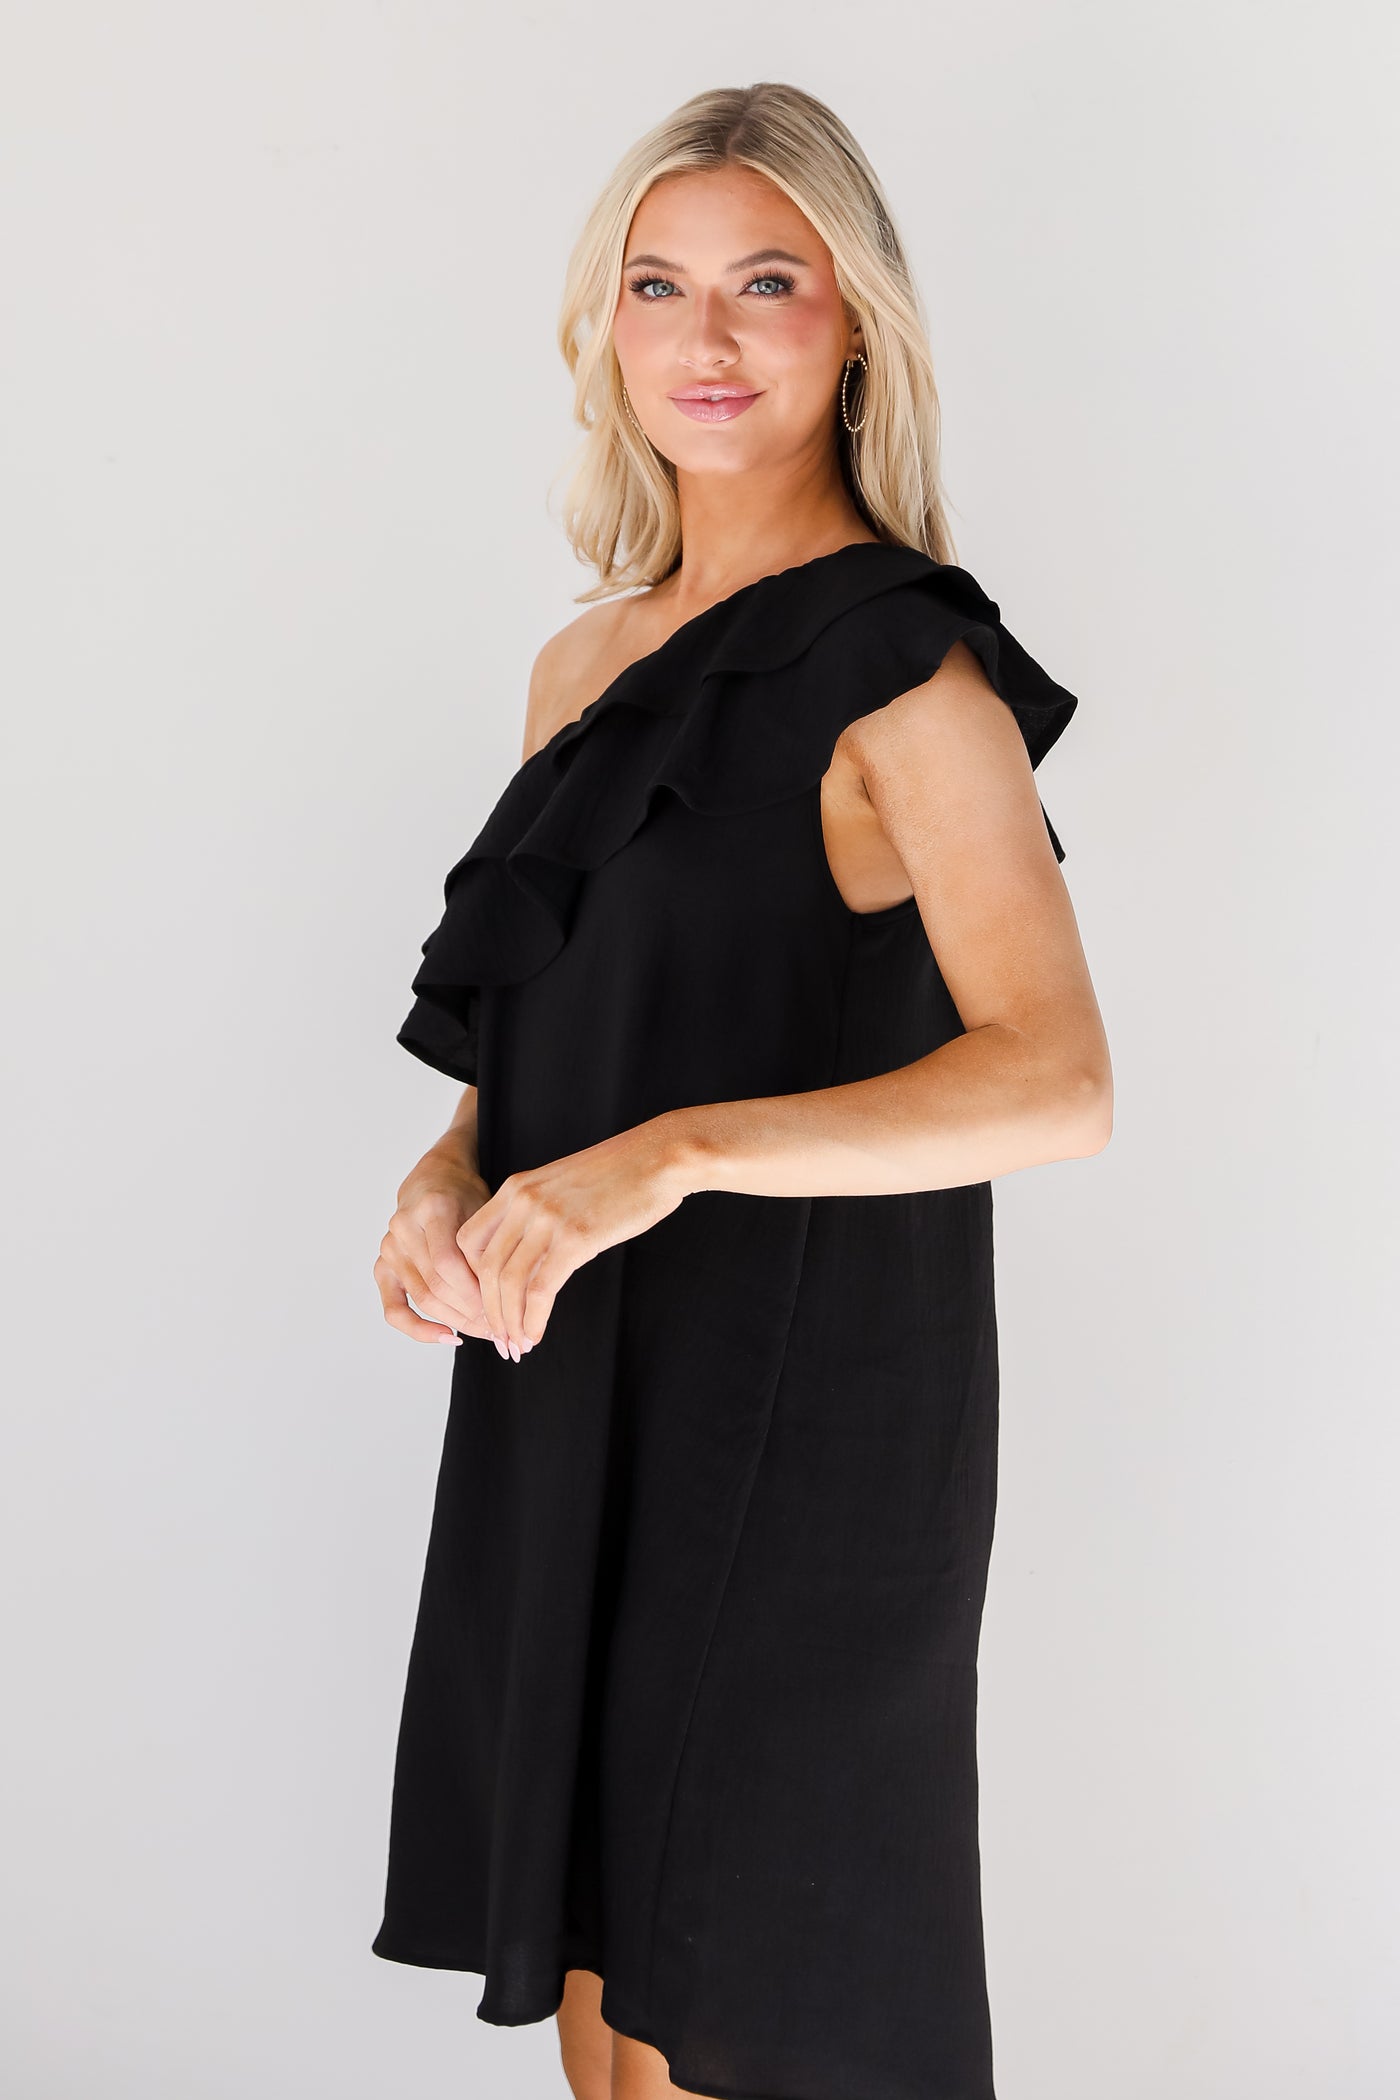 black One-Shoulder Mini Dress side view